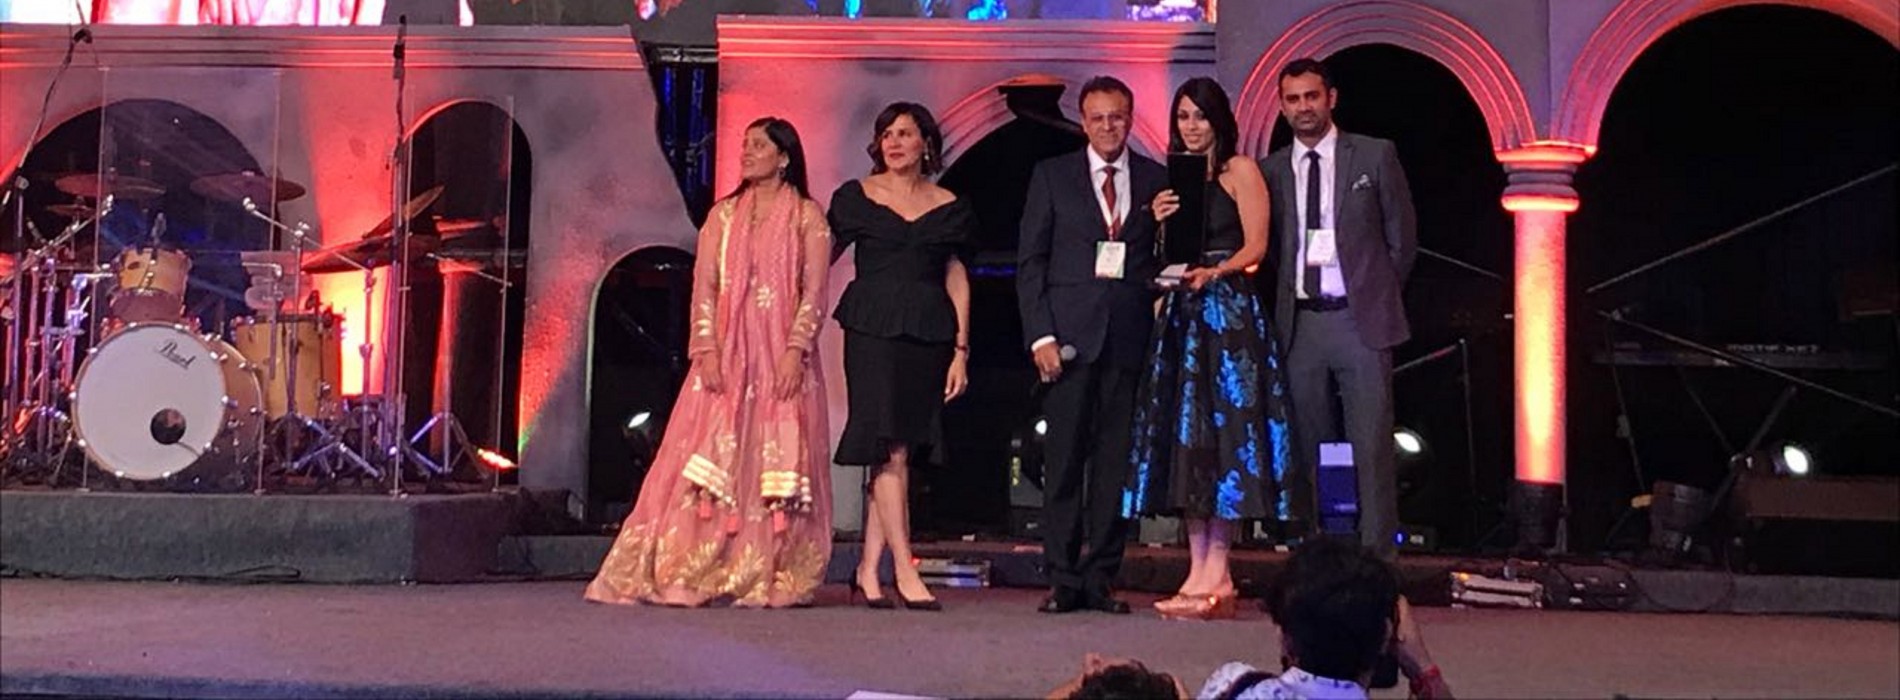 Tamarind Global wins 4 awards at GIWA awards 2018